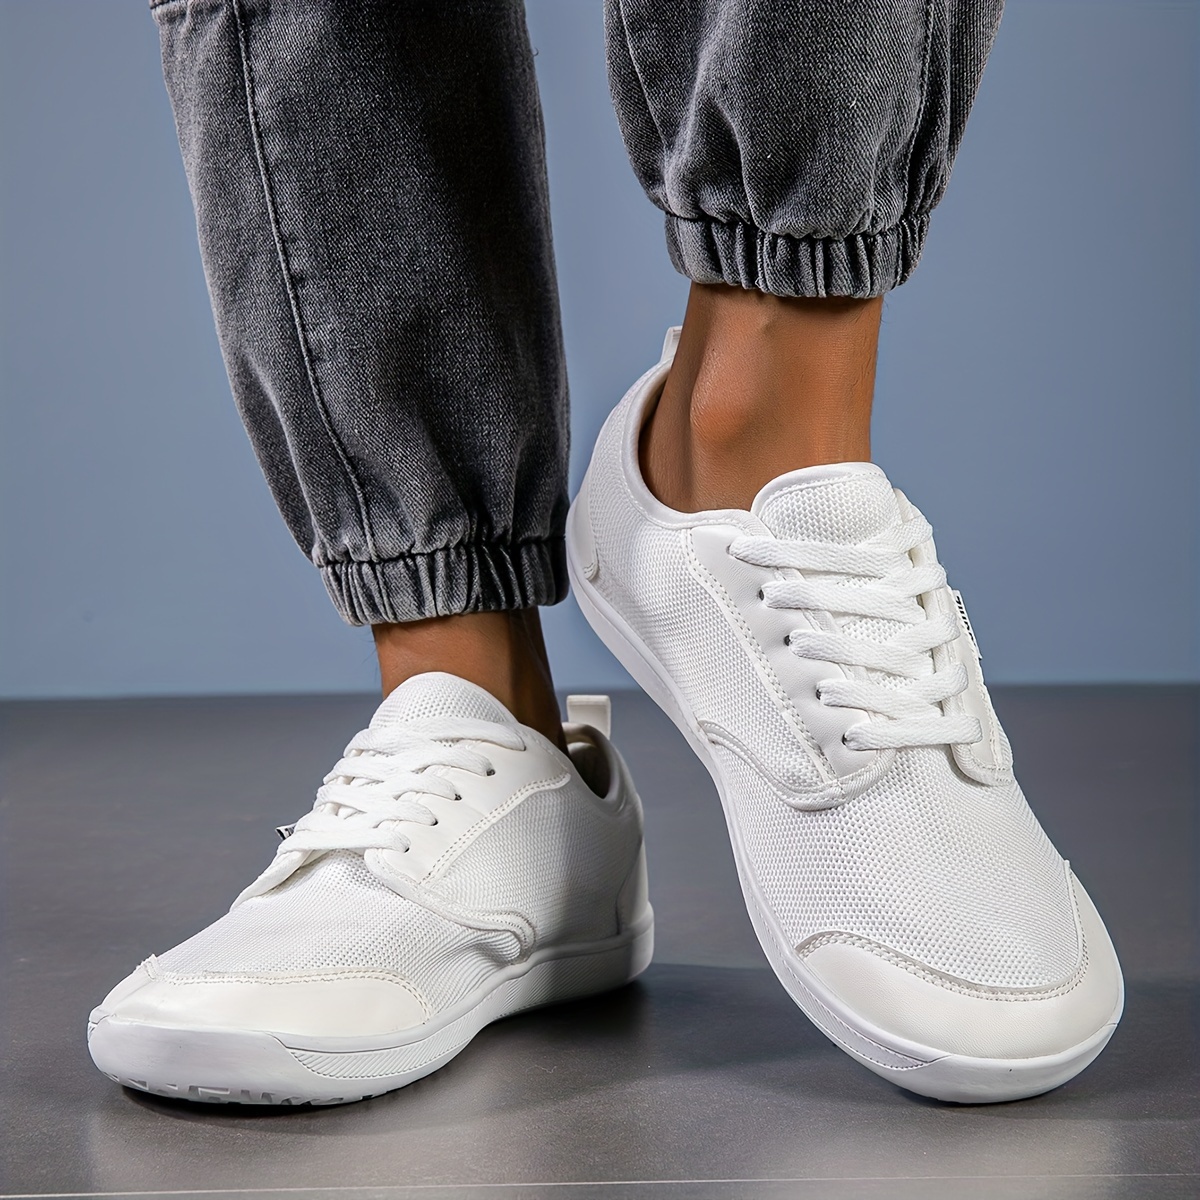 solid versatile sneakers men s minimalist style round toe details 0